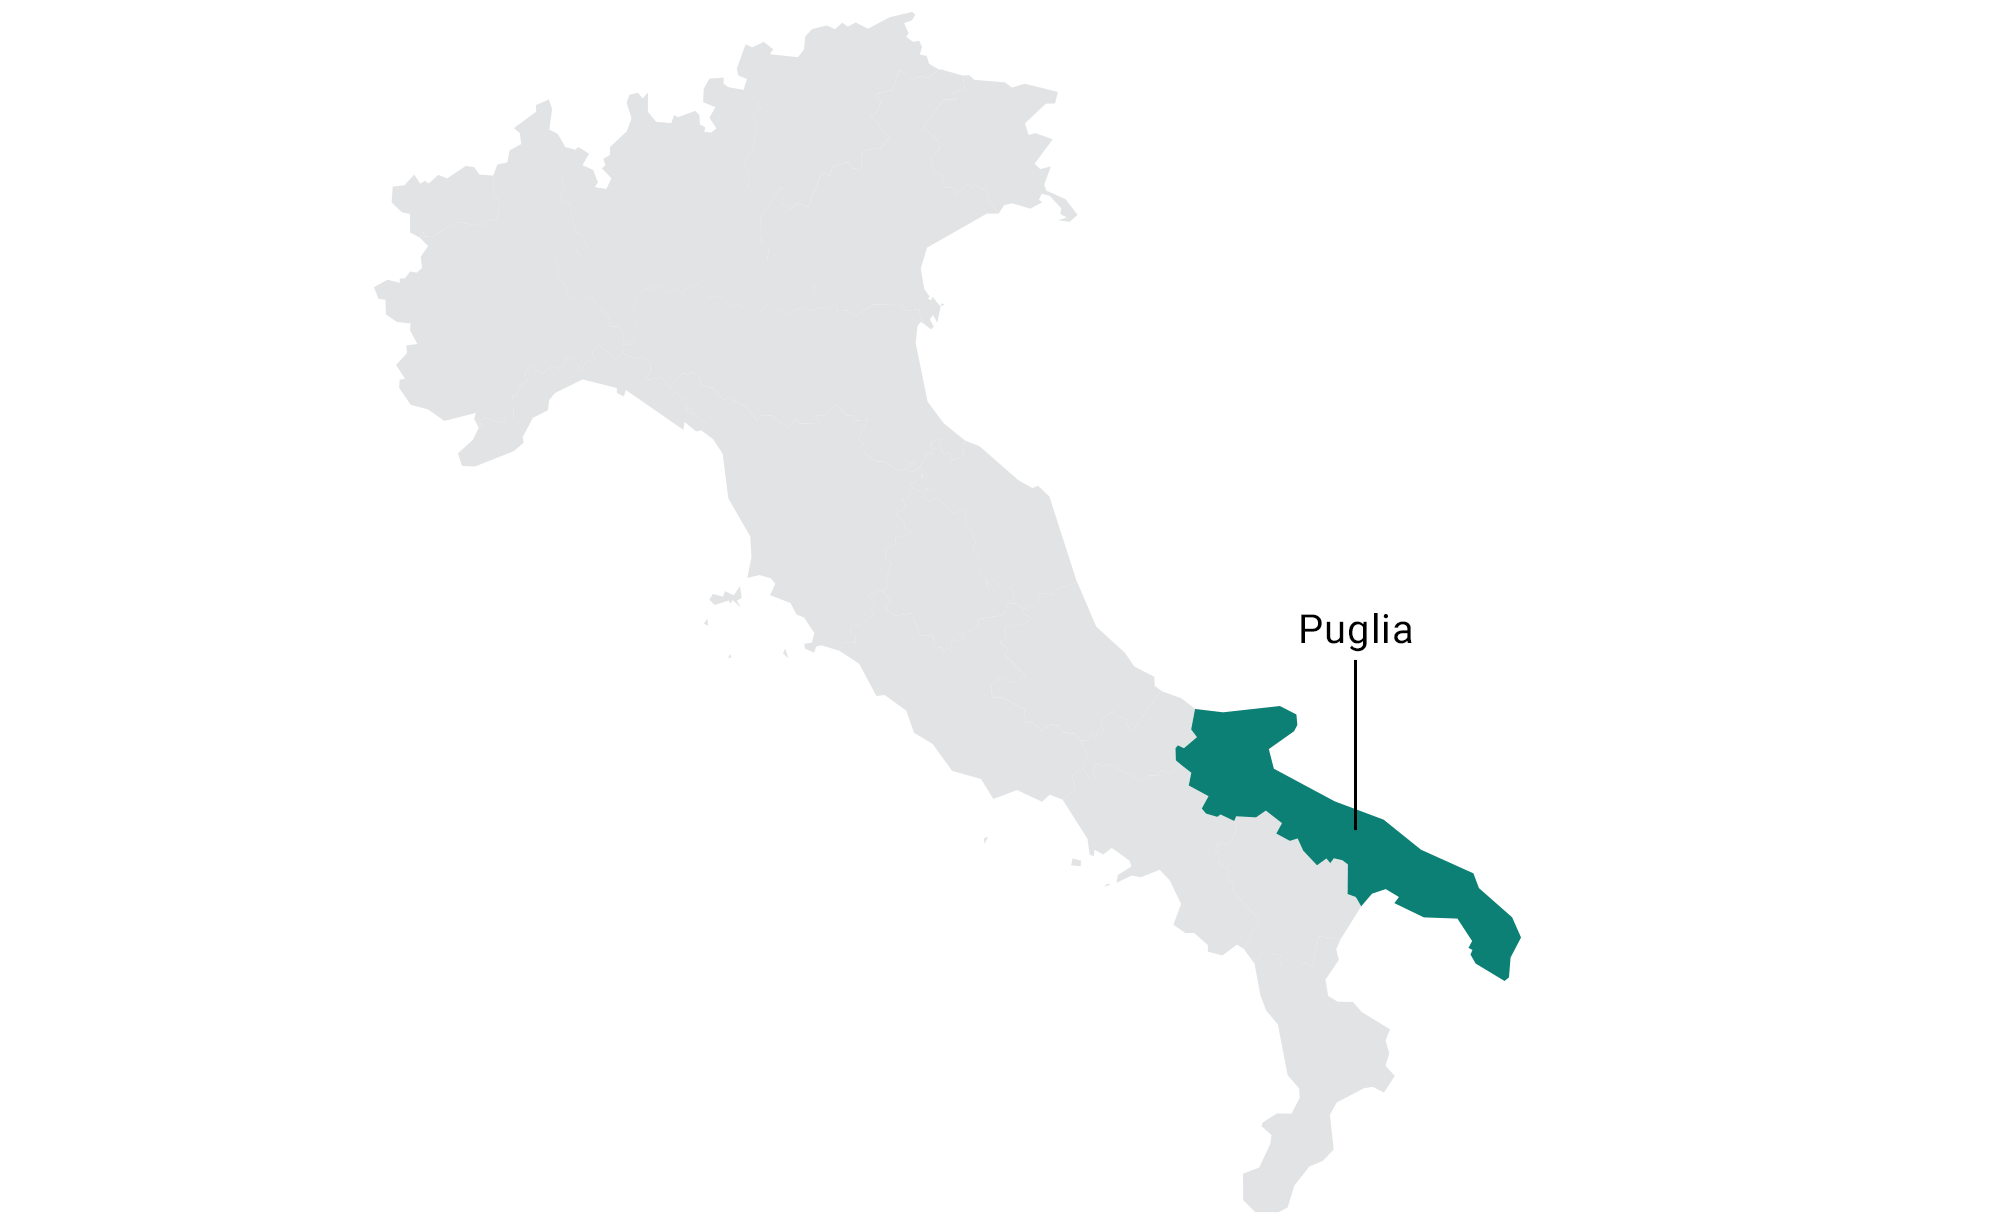 map of primitivo wine region in Italy: Puglia